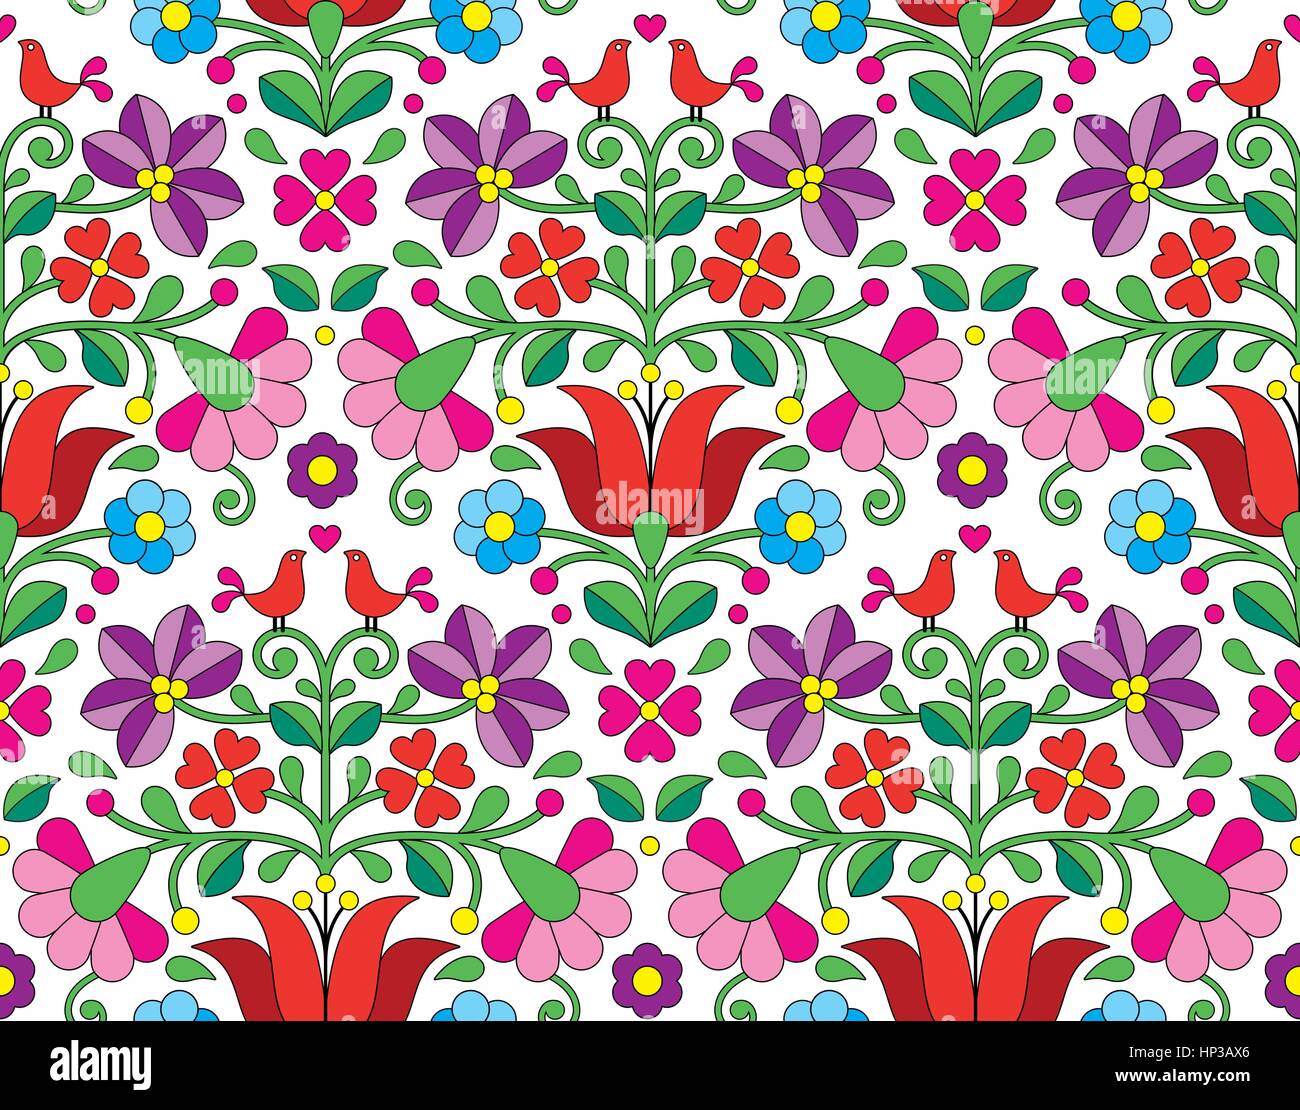 Kalocsai floral emrboidery seamless pattern - Hungarian folk art ...